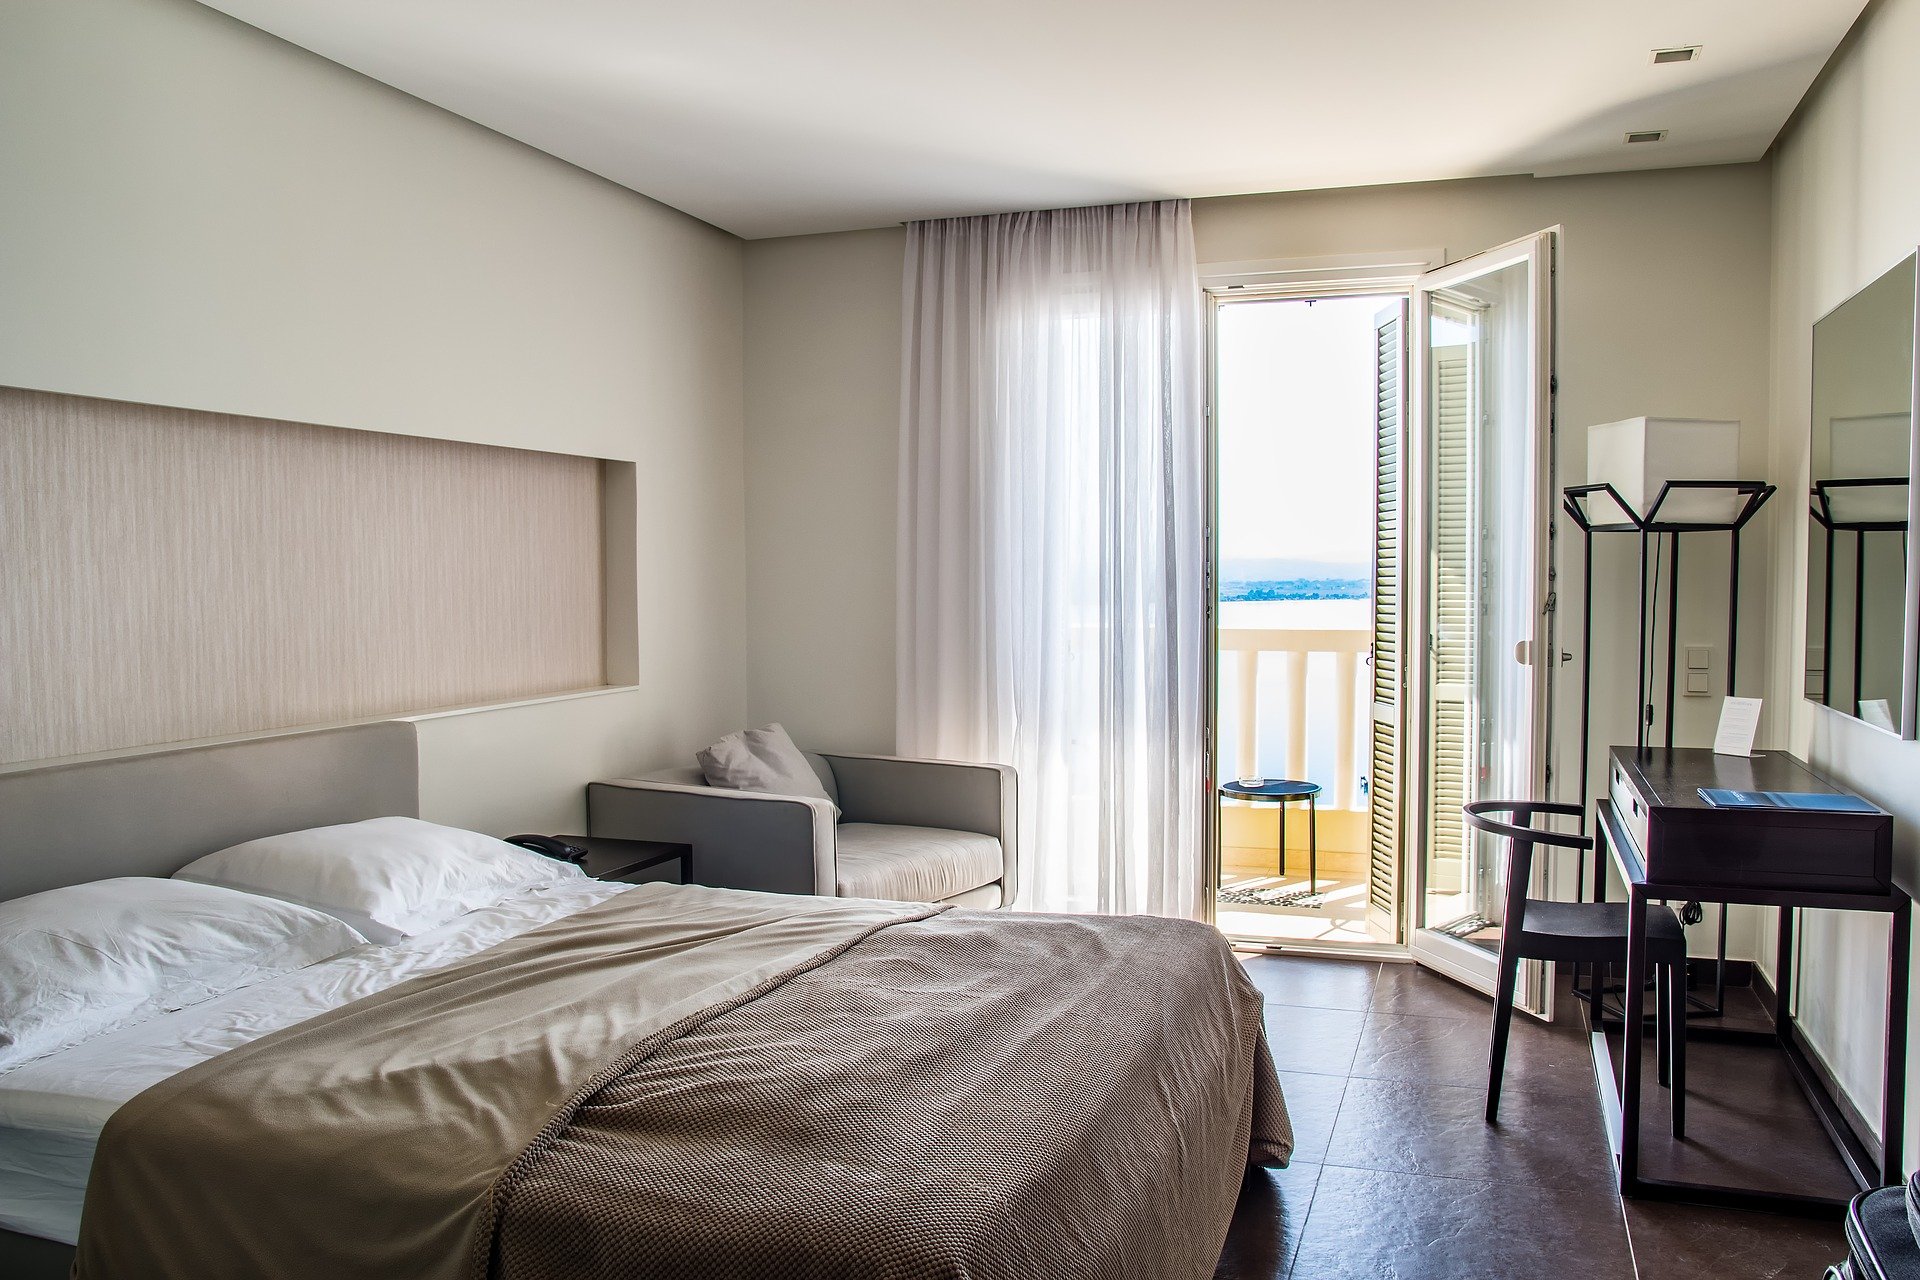 Hotel bed | Source: Pixabay 